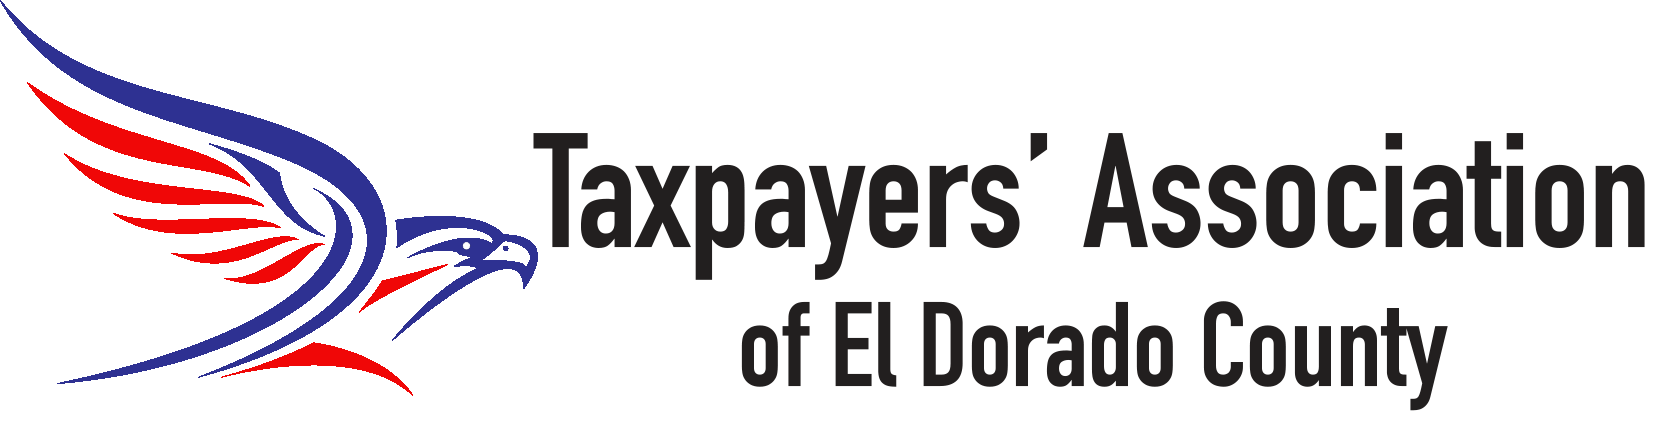 Taxpayers' Association of El Dorado County